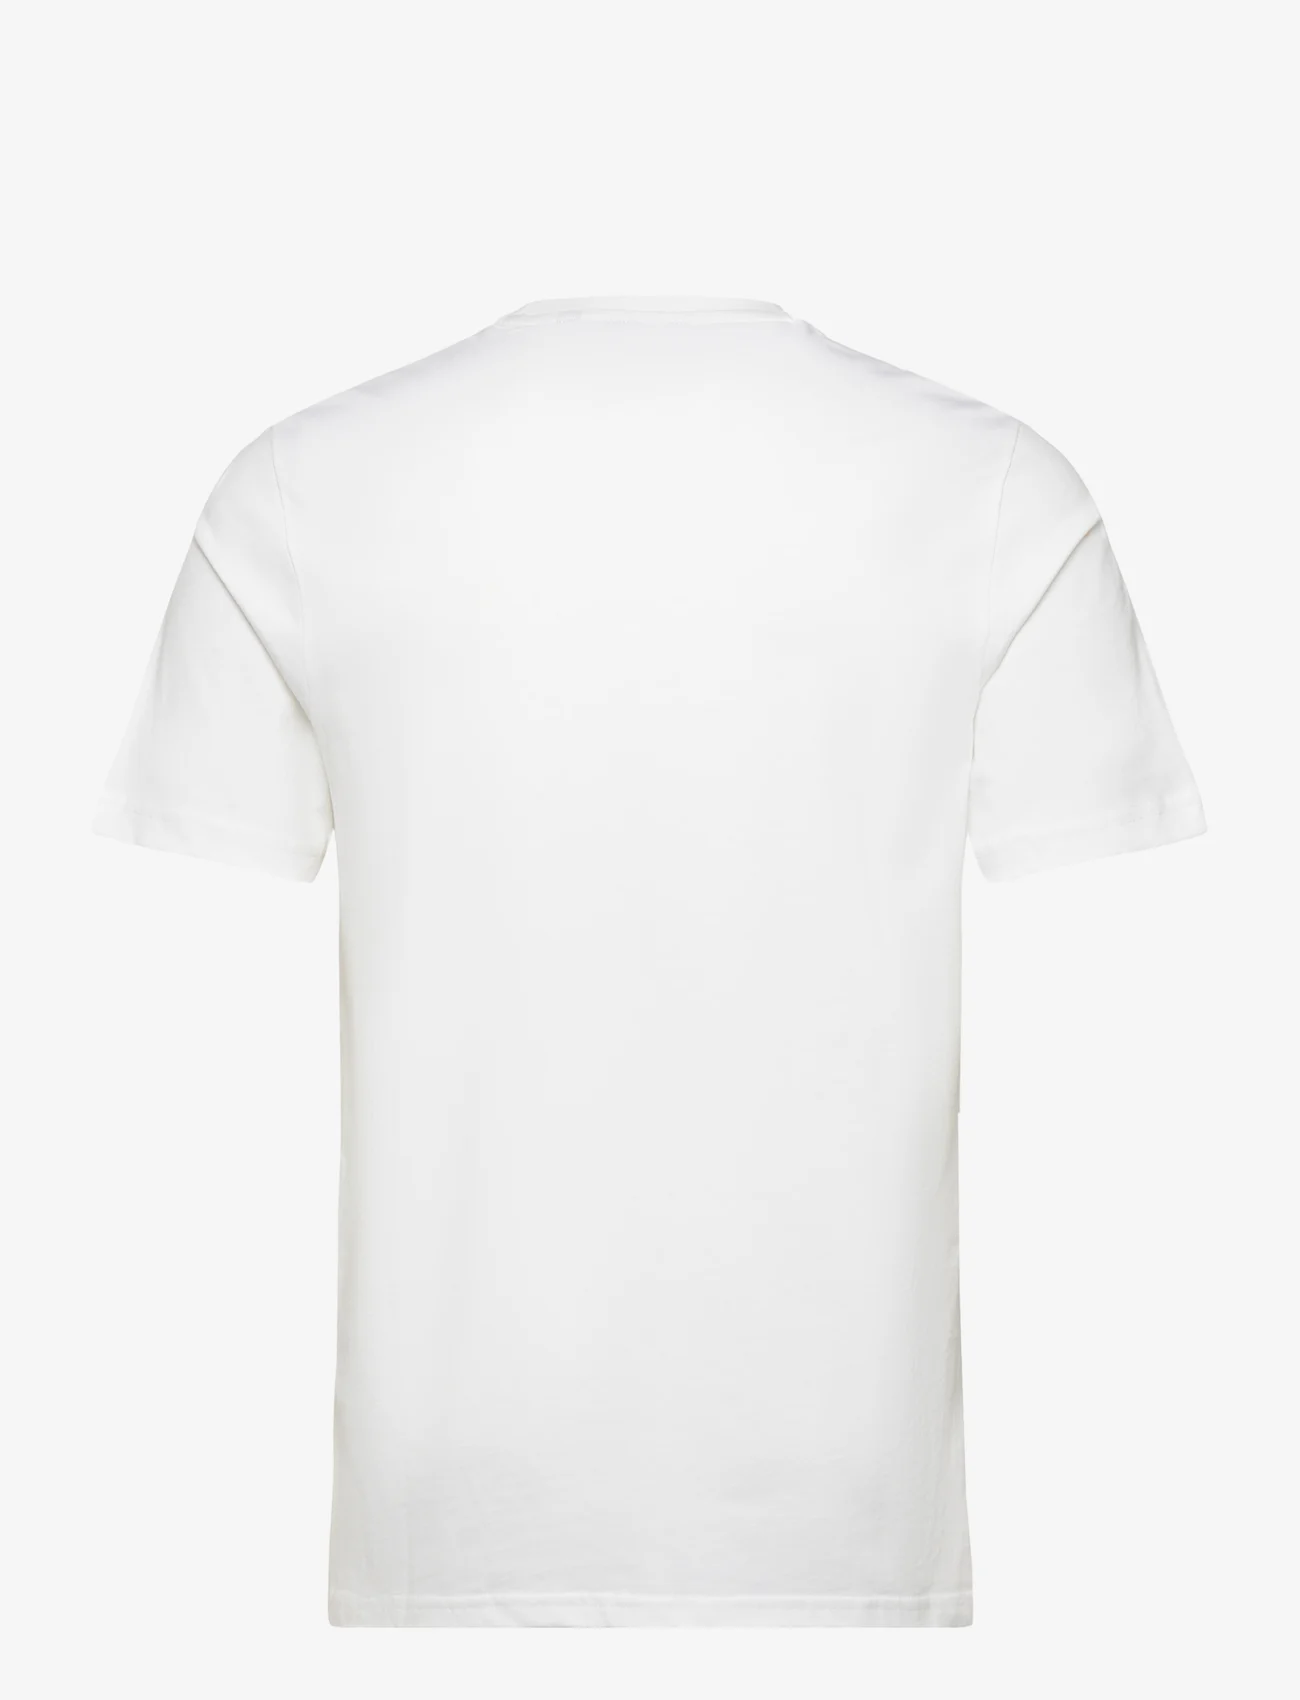 Lyle & Scott - Pocket T-Shirt - short-sleeved t-shirts - 626 white - 1